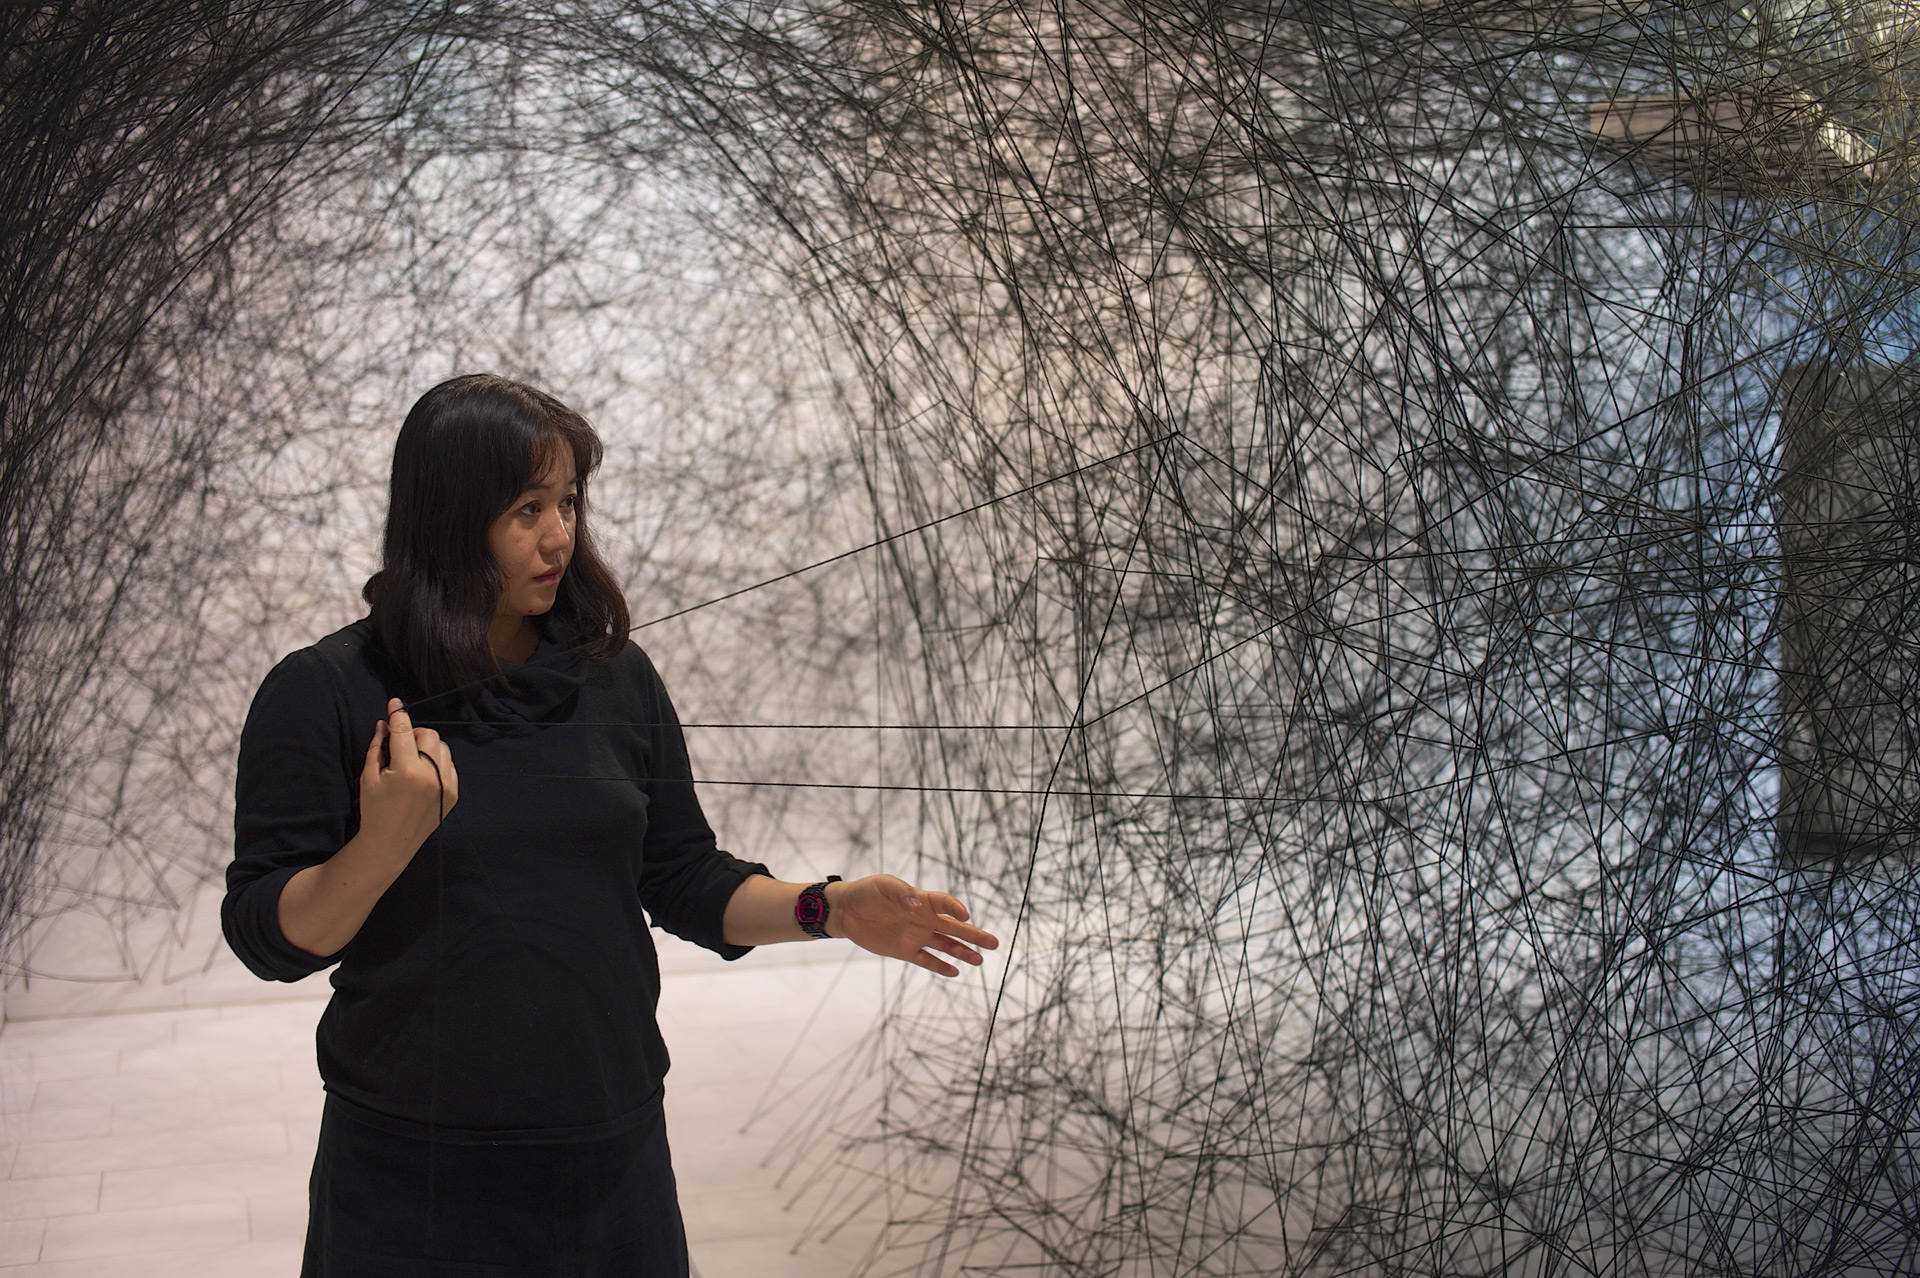 Chiharu Shiota exhibition: 'Infinity Lines' | SCAD.edu